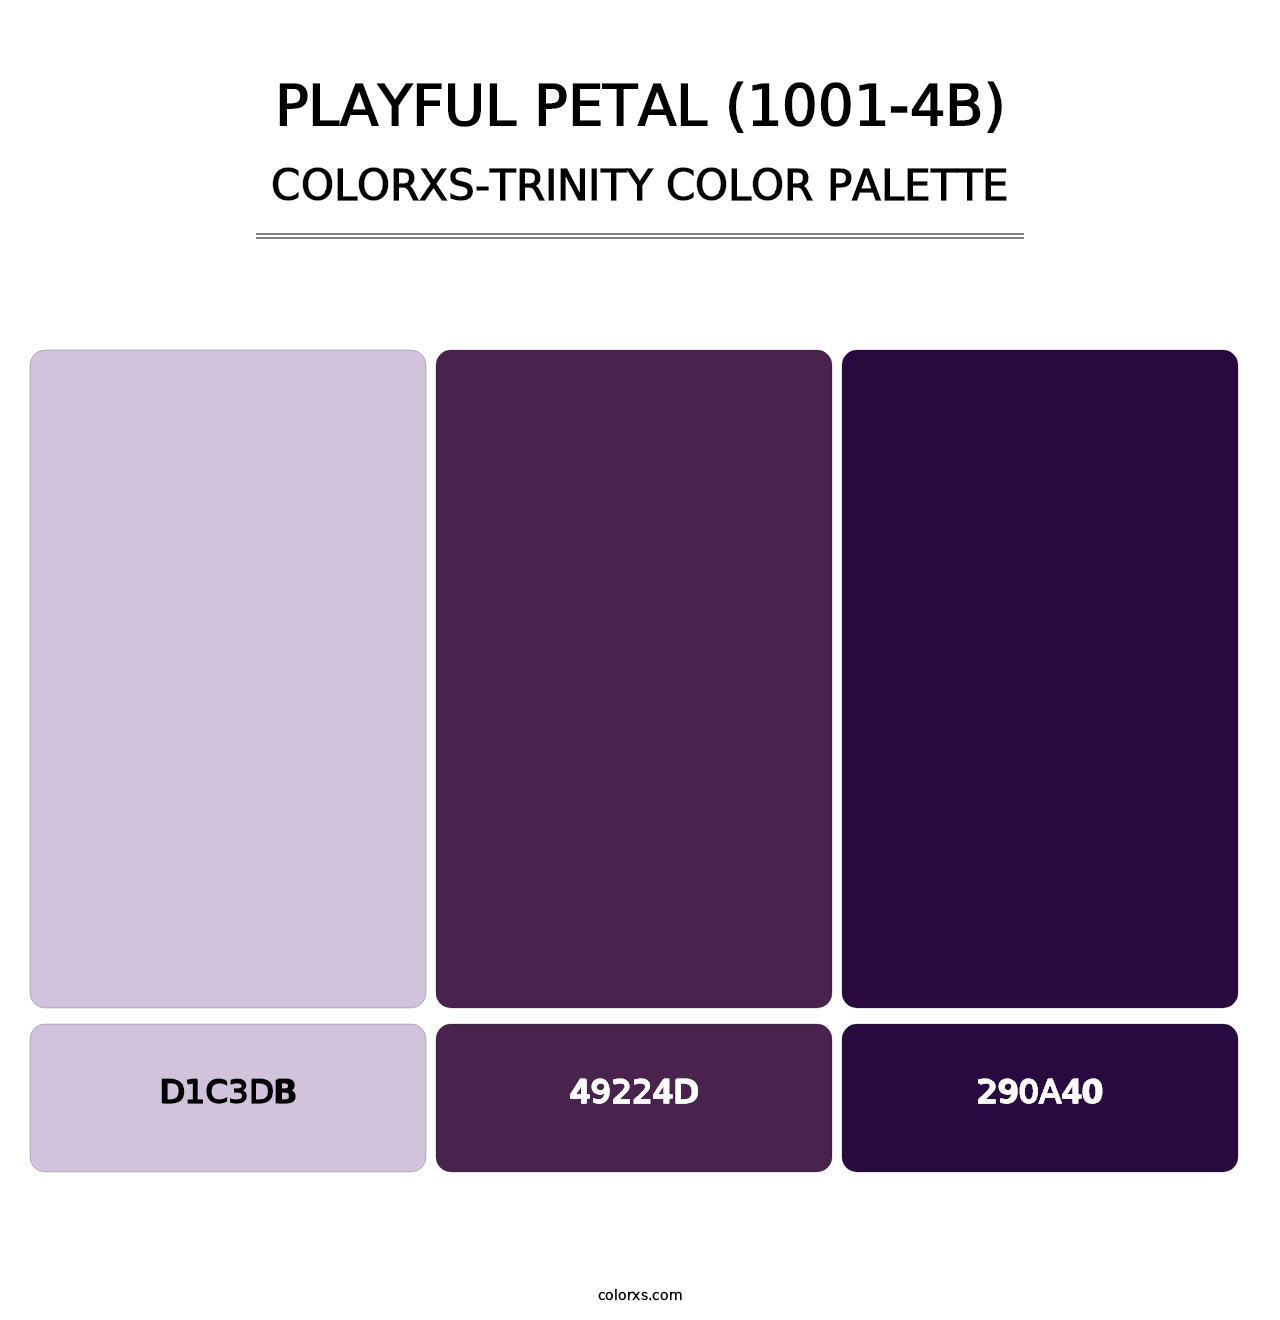 Playful Petal (1001-4B) - Colorxs Trinity Palette